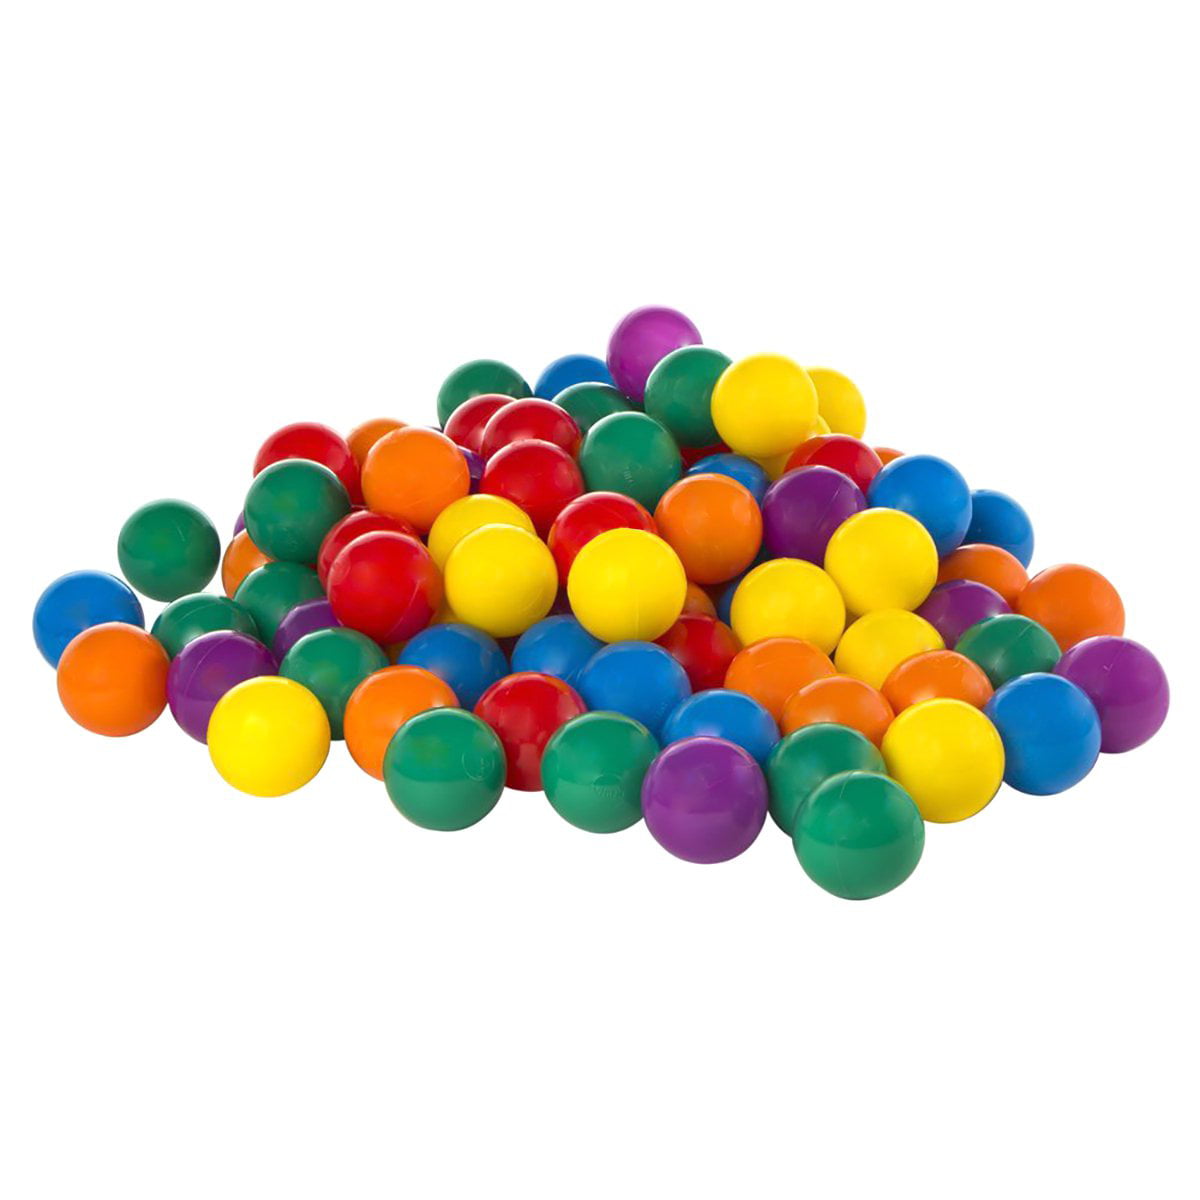 2X 100 Multi Coloured Play Balls